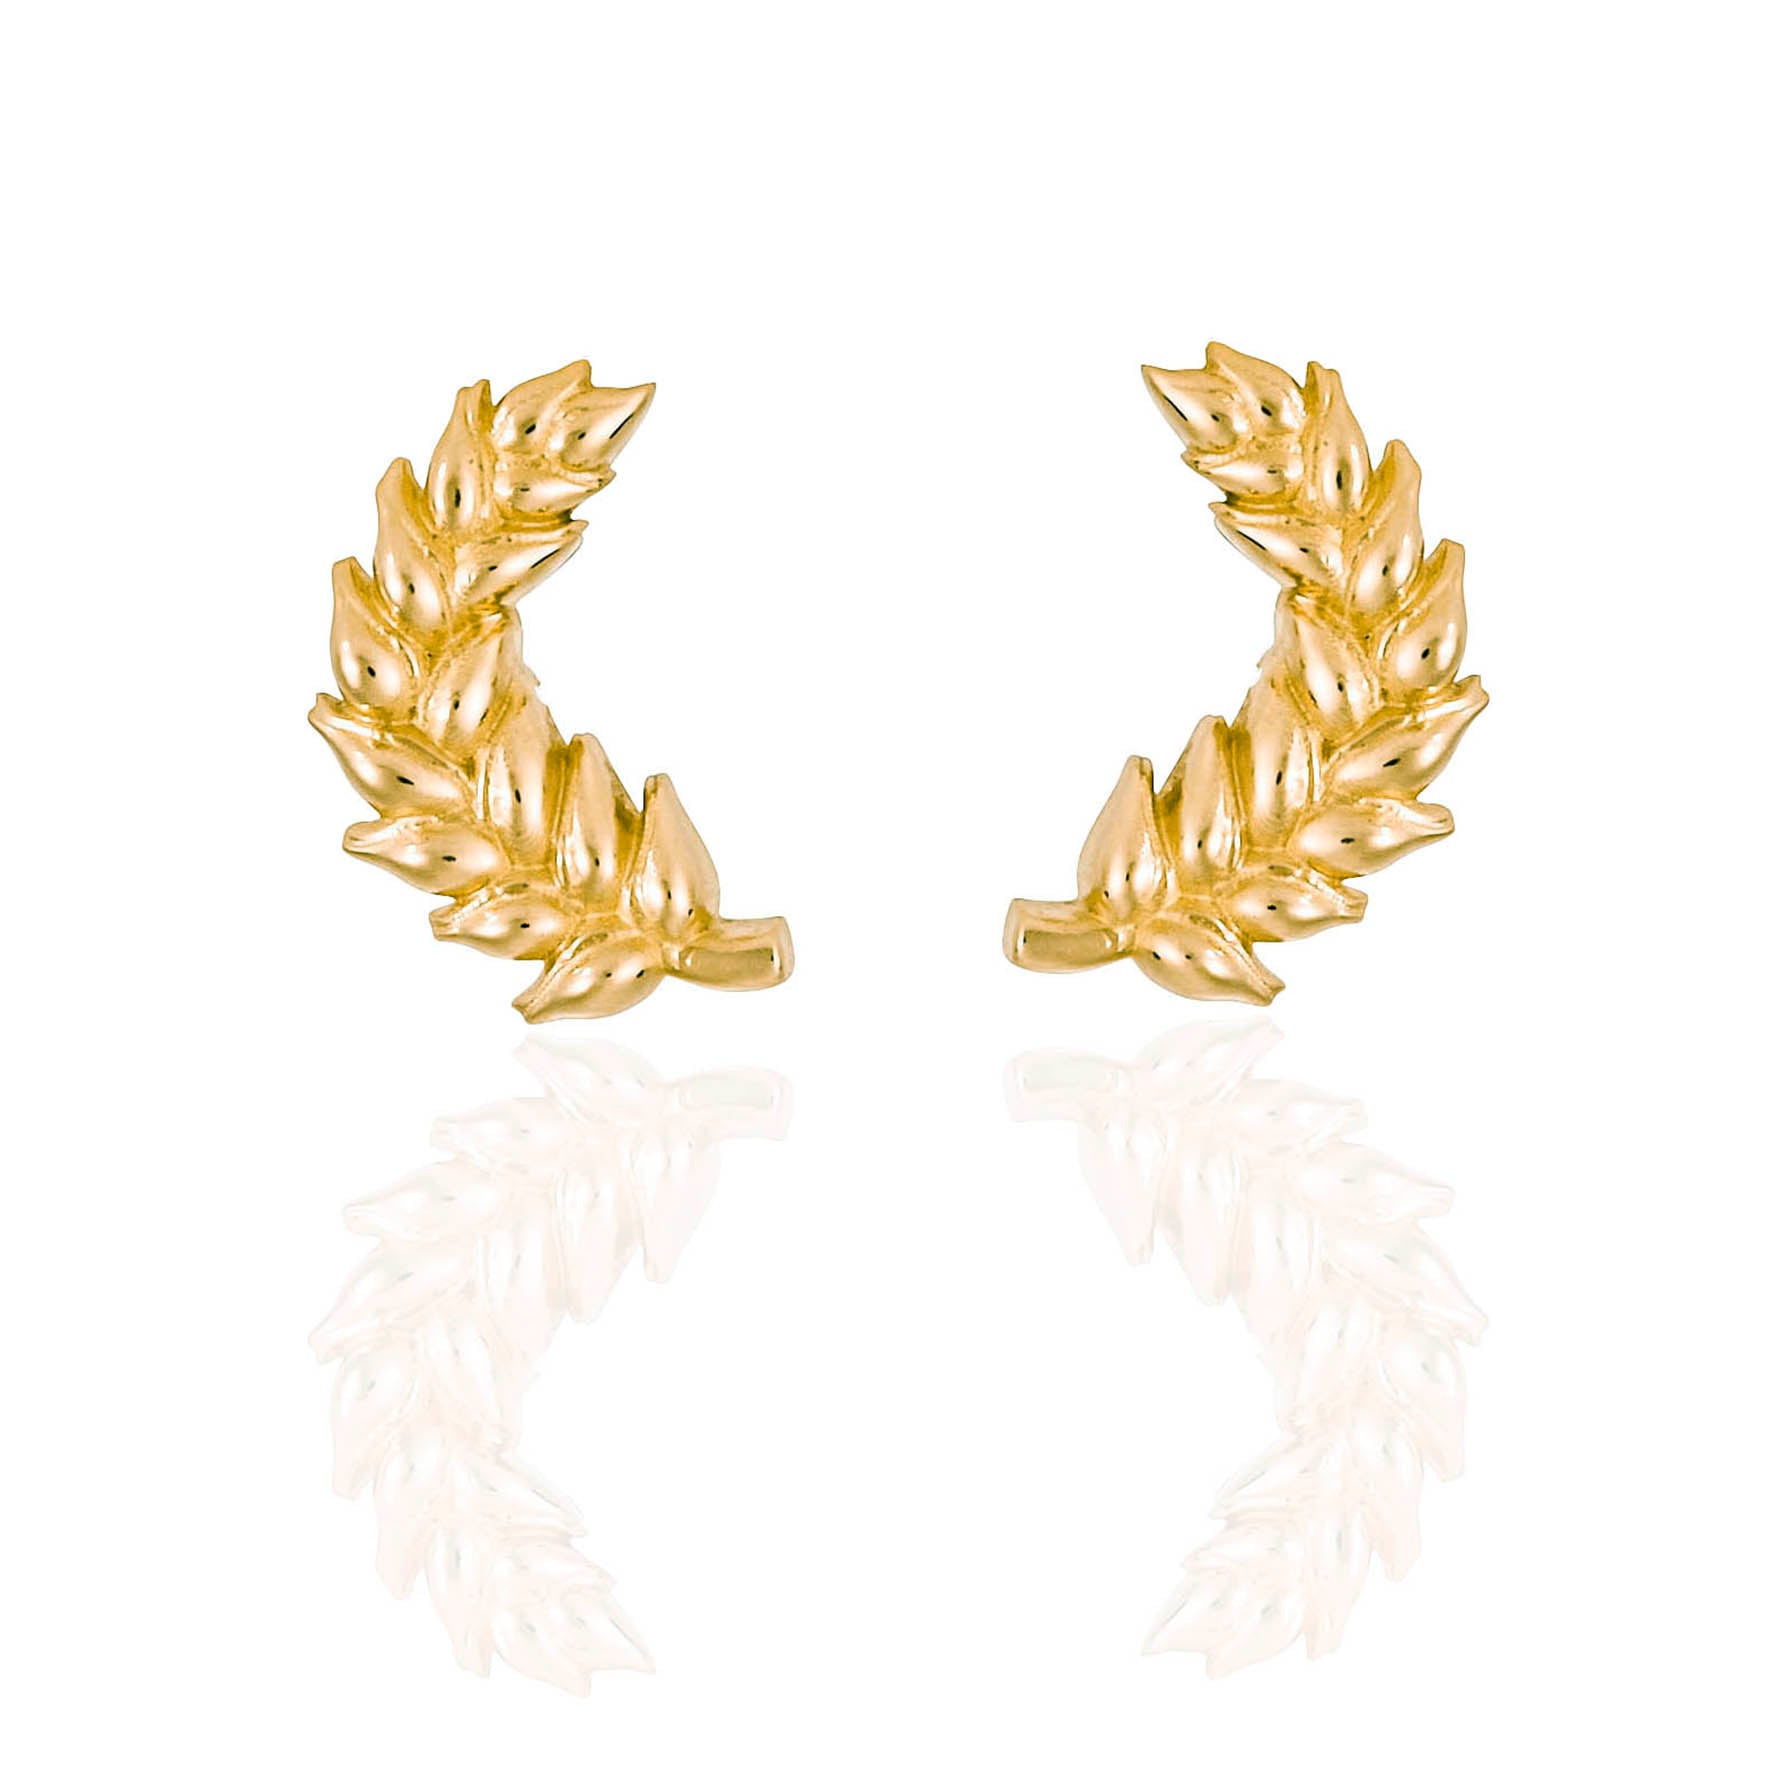 Palomino Wheat earrings in 18 ct Yellow Gold